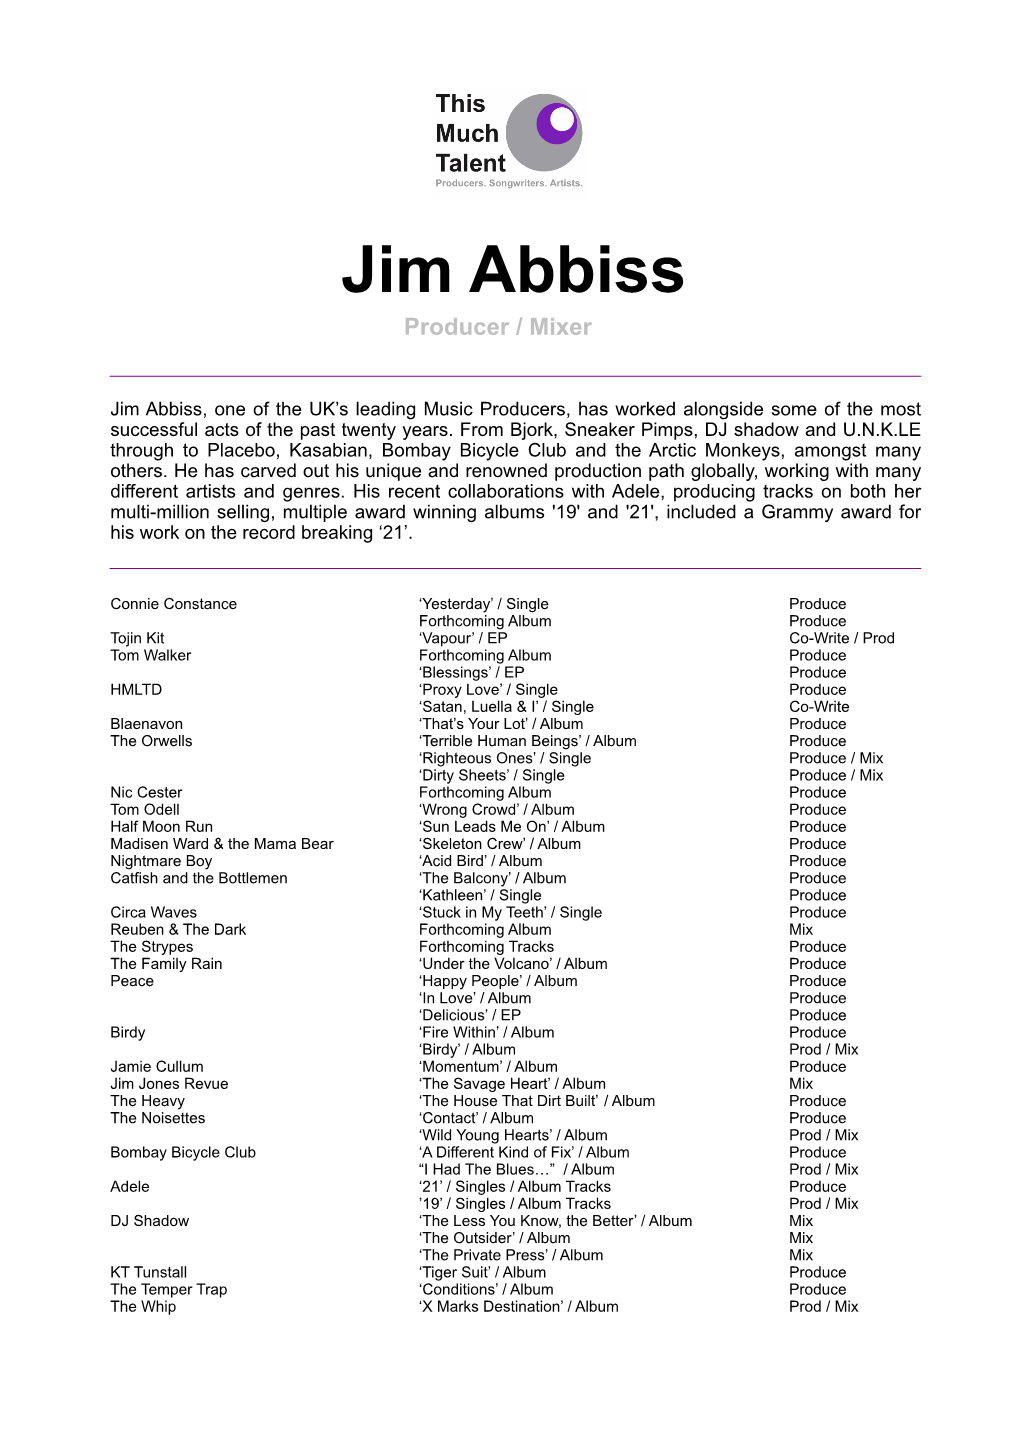 Jim Abbiss Complete CV